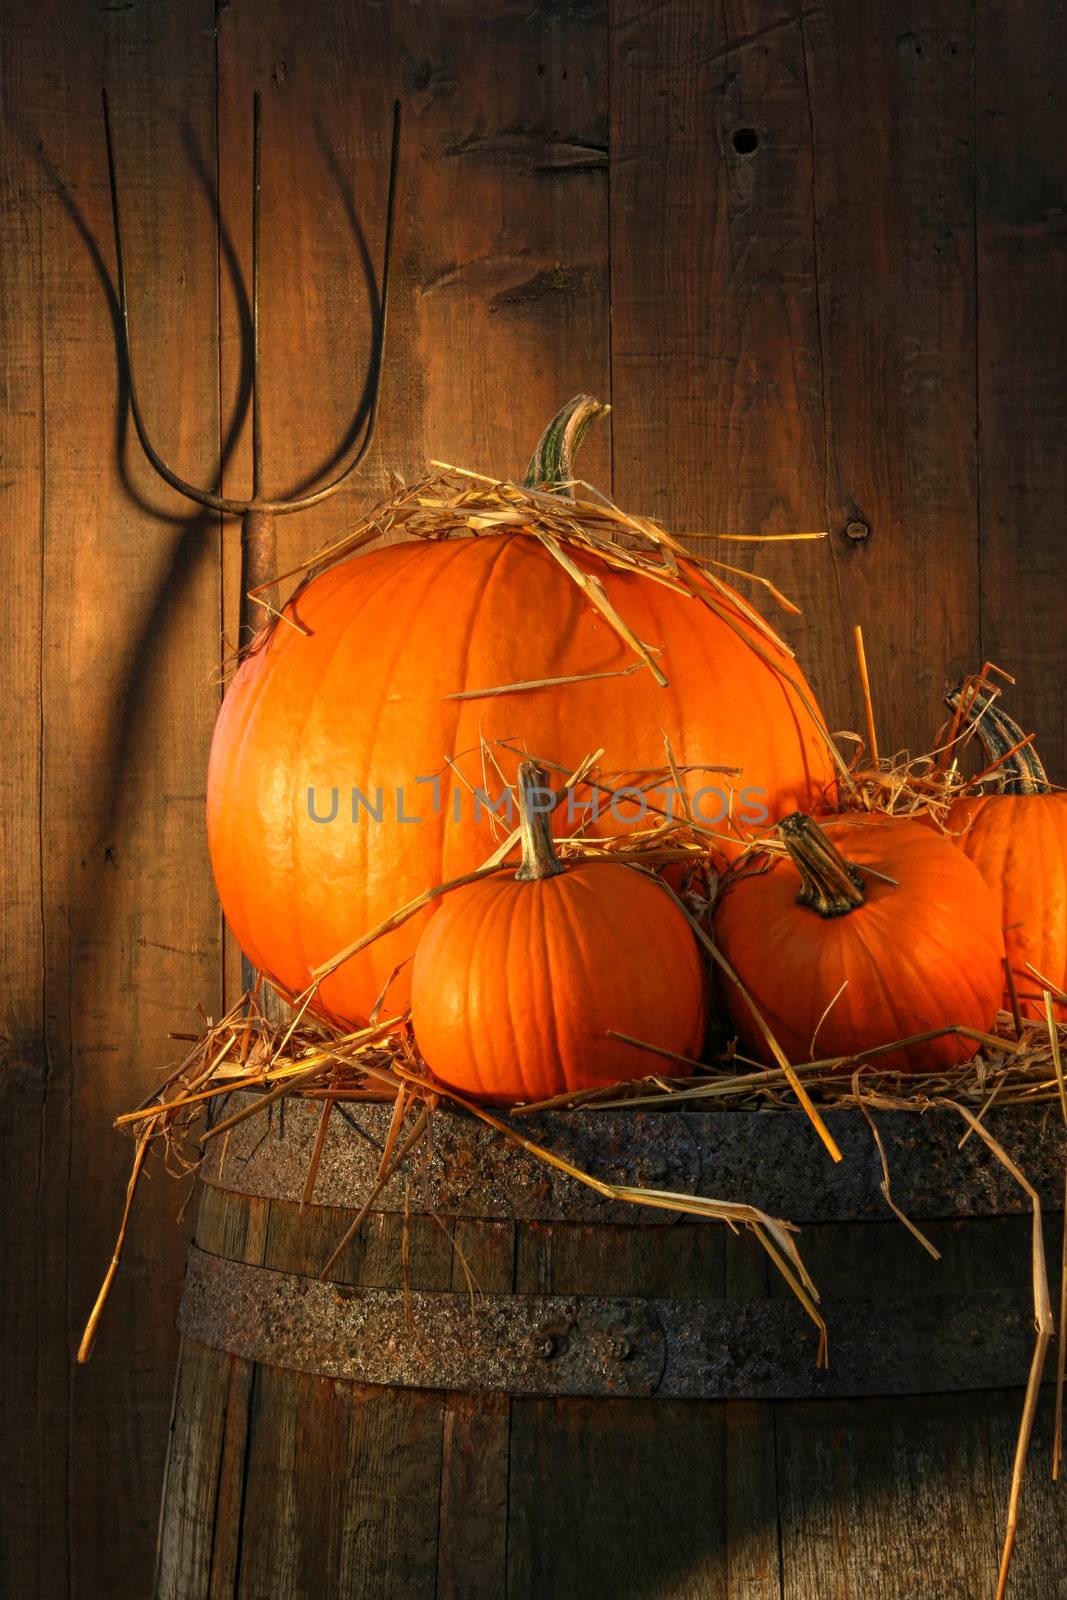 Pumpkins on wine barrel with pitch fork